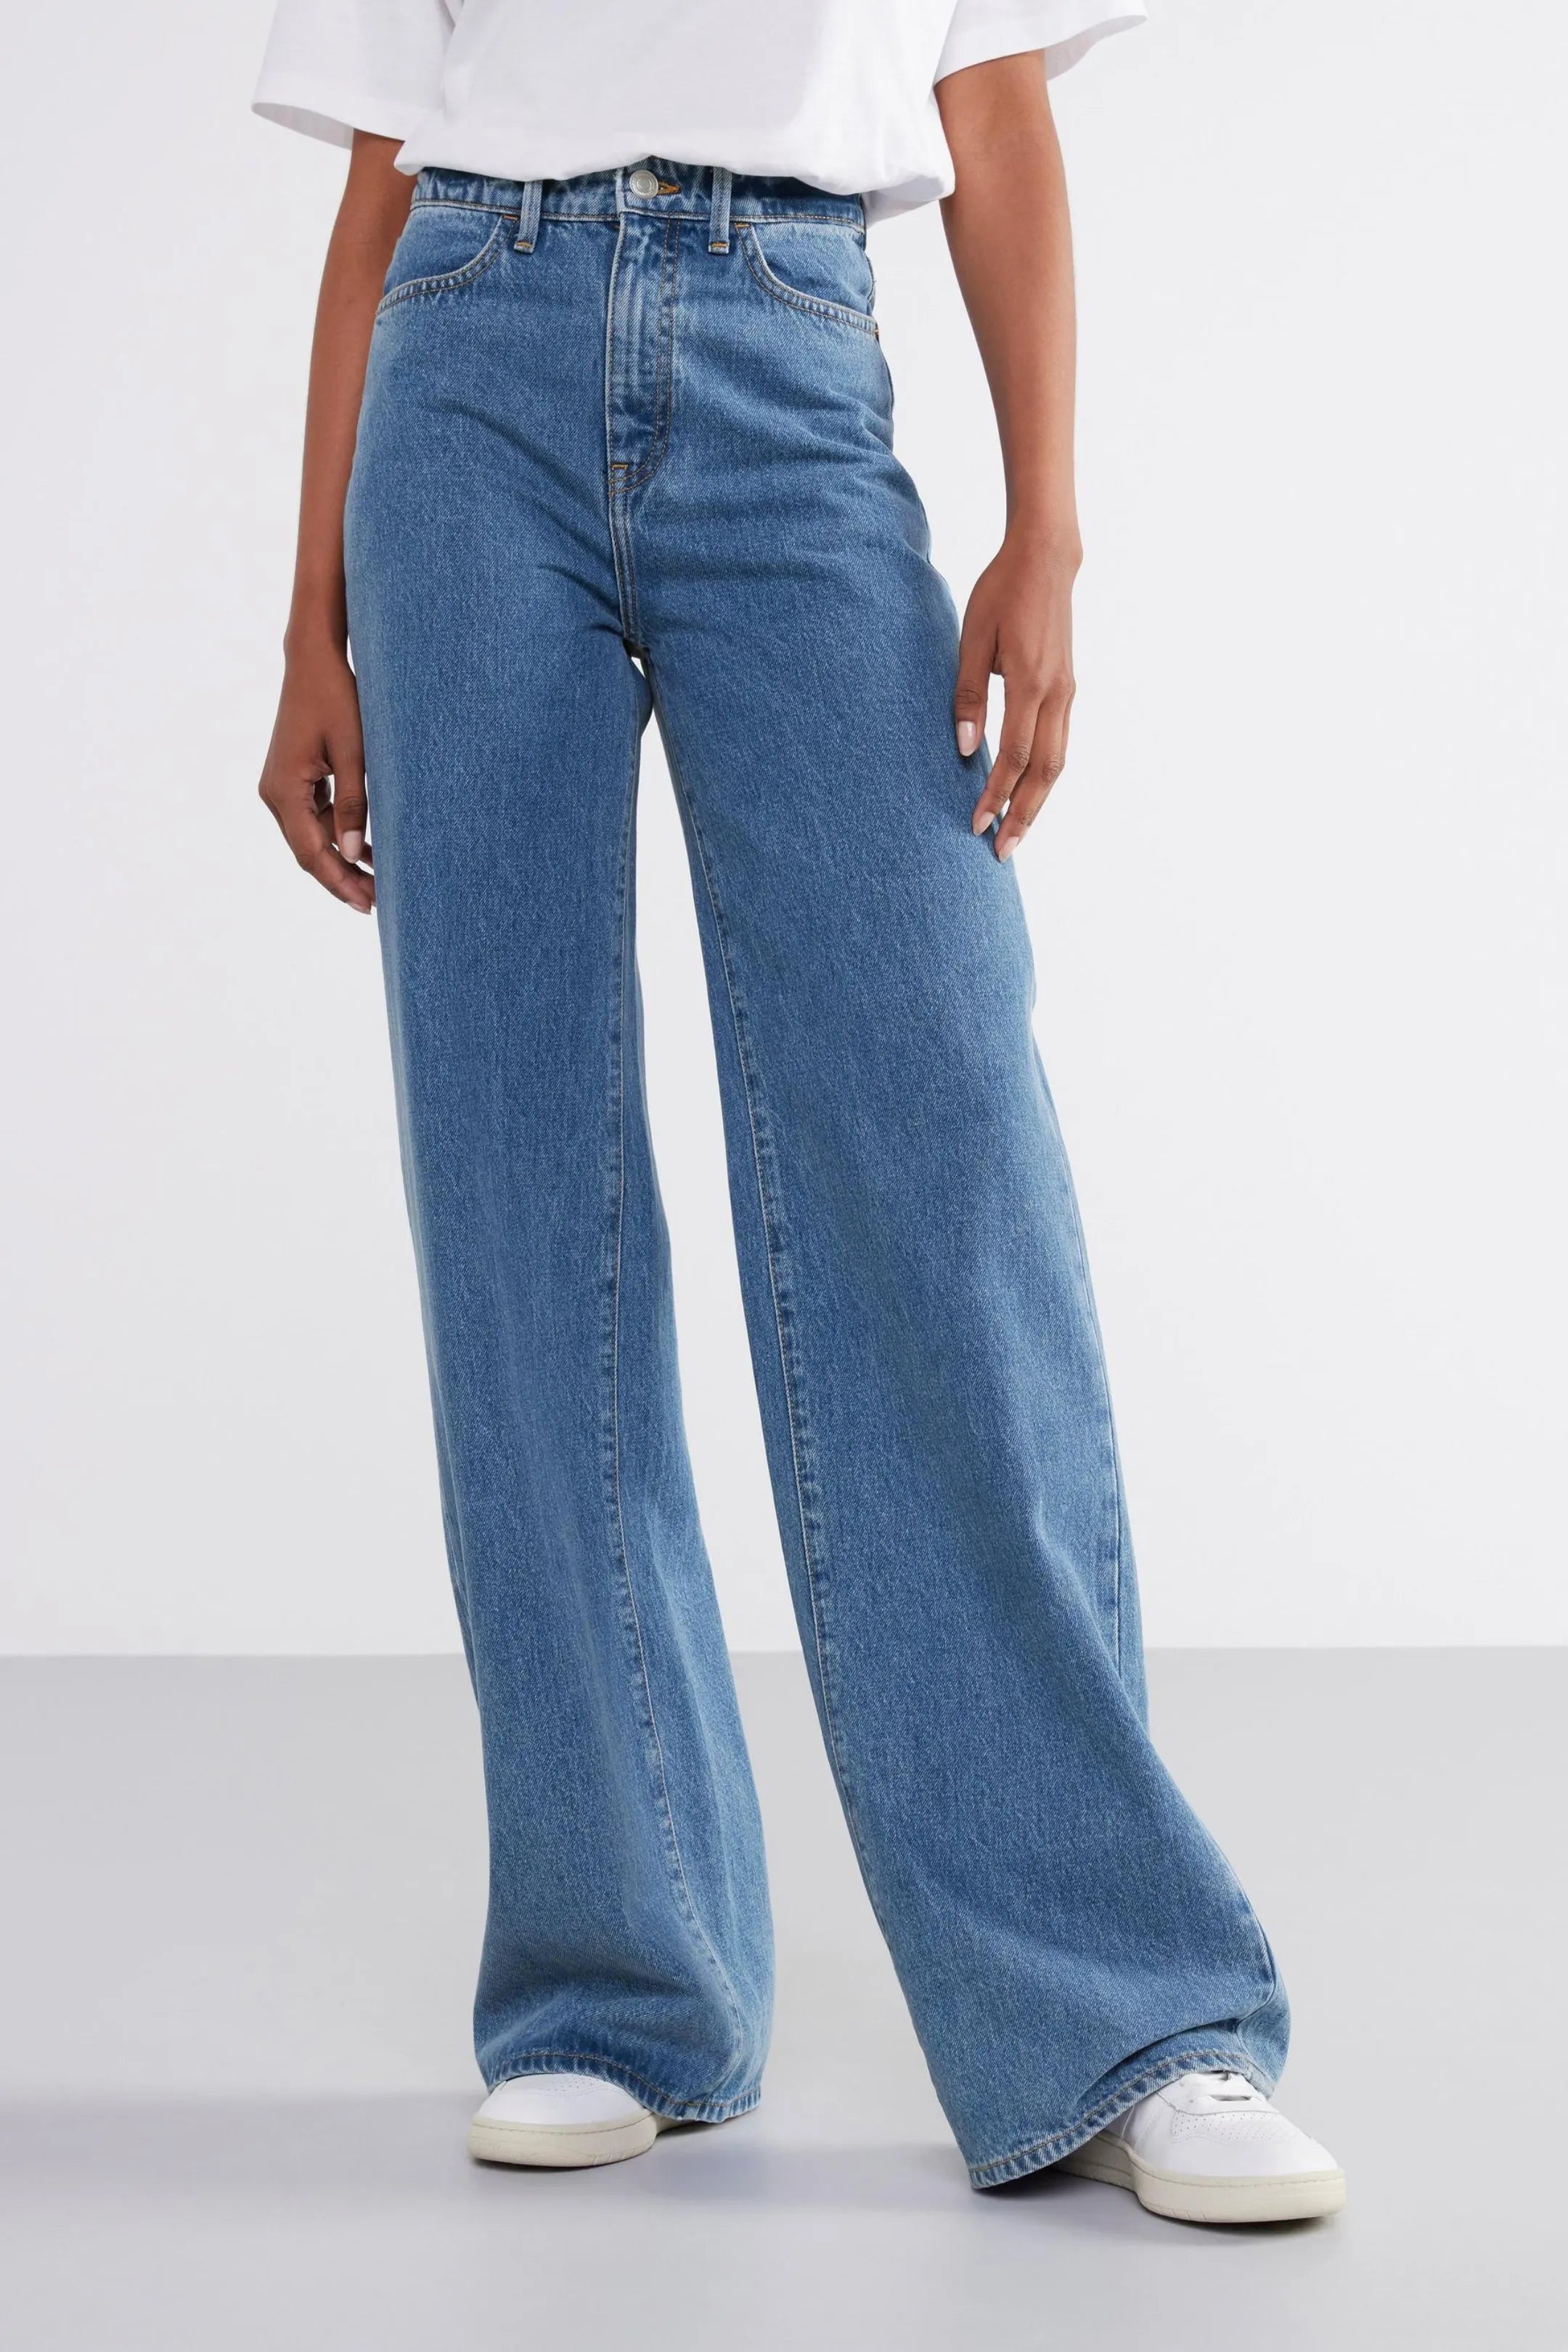 JACKIE Extra wide high waist jeans – Denim600